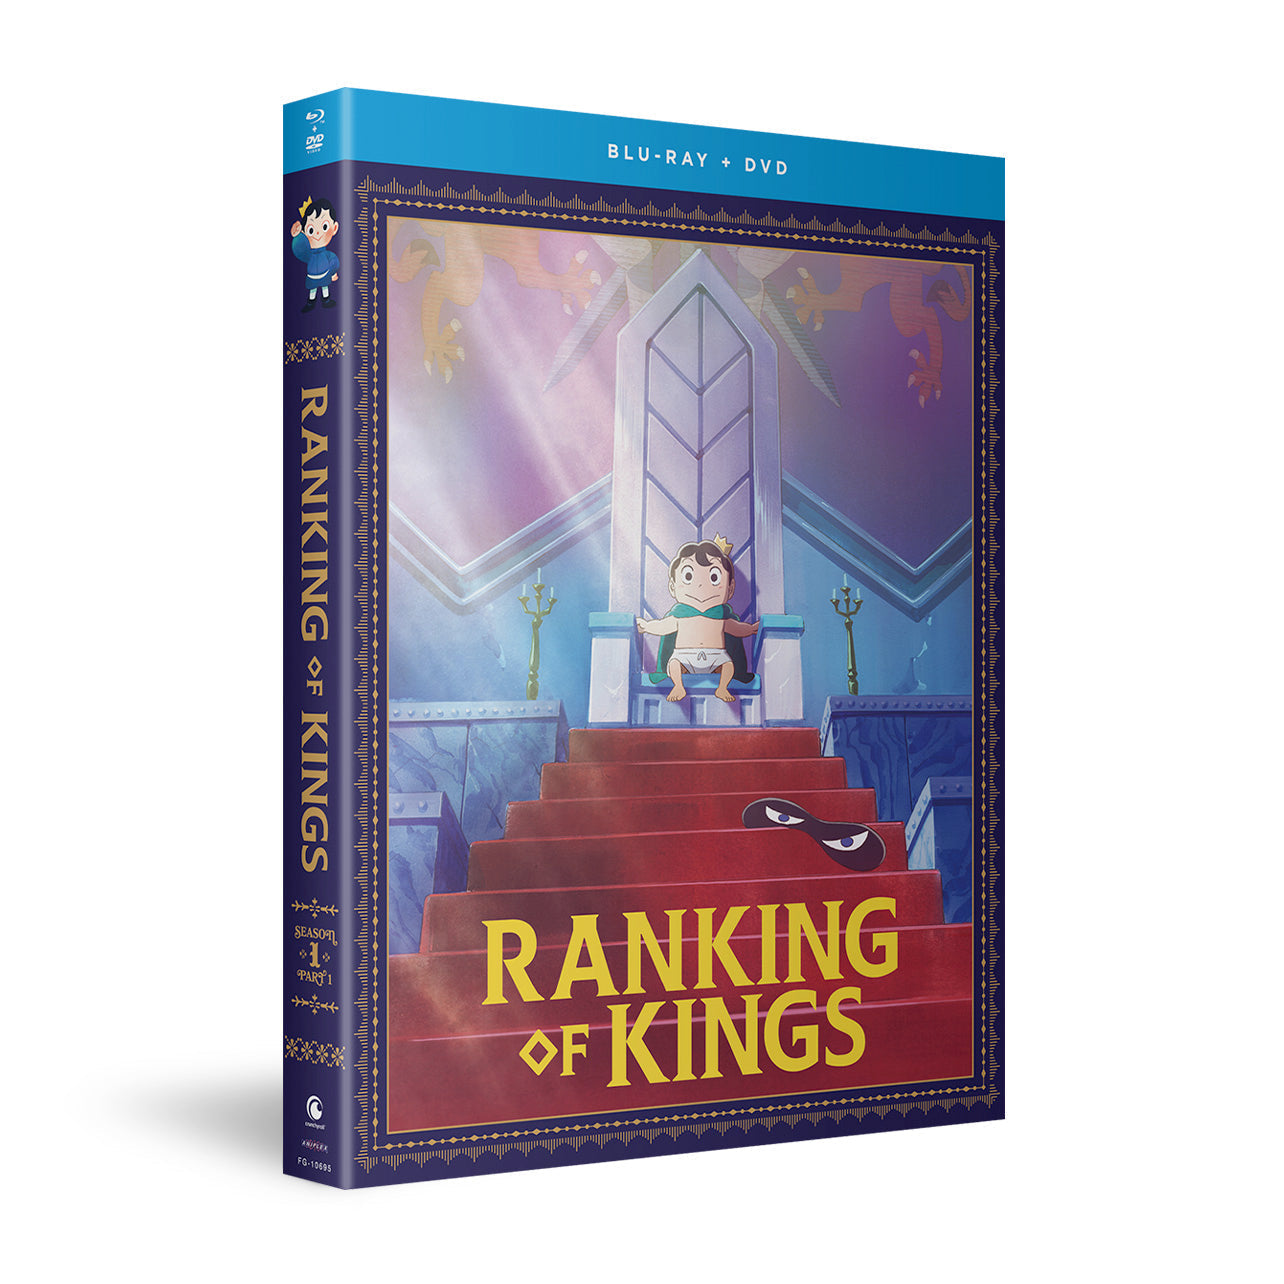 Ranking of Kings - Season 1 Part 1 - BD/DVD image count 2